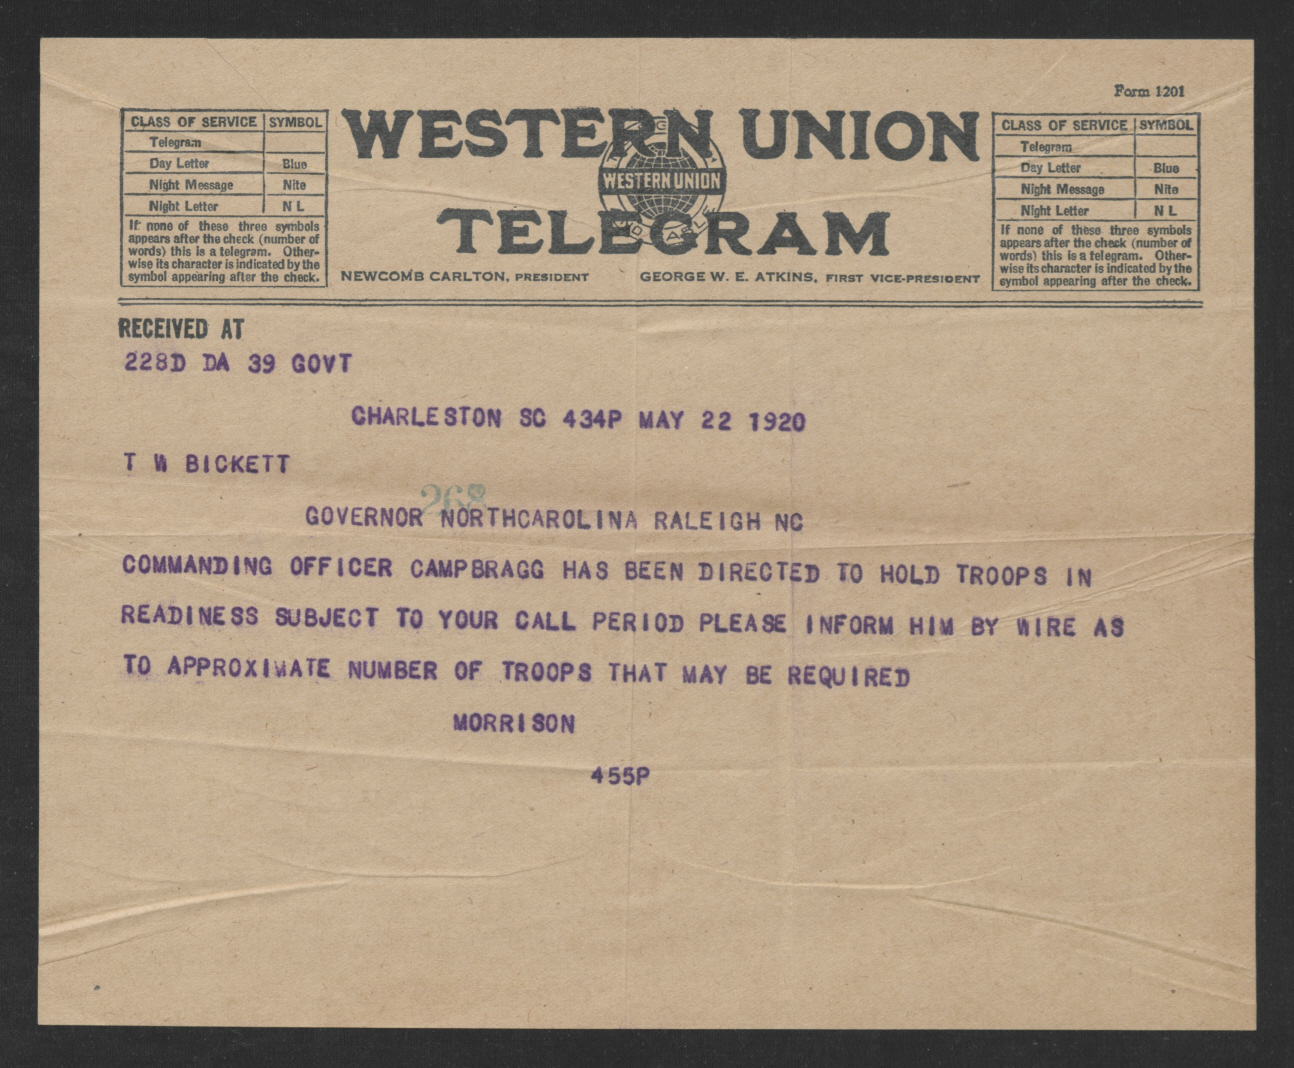 Telegram from John F. Morrison to Thomas W. Bickett, May 22, 1920